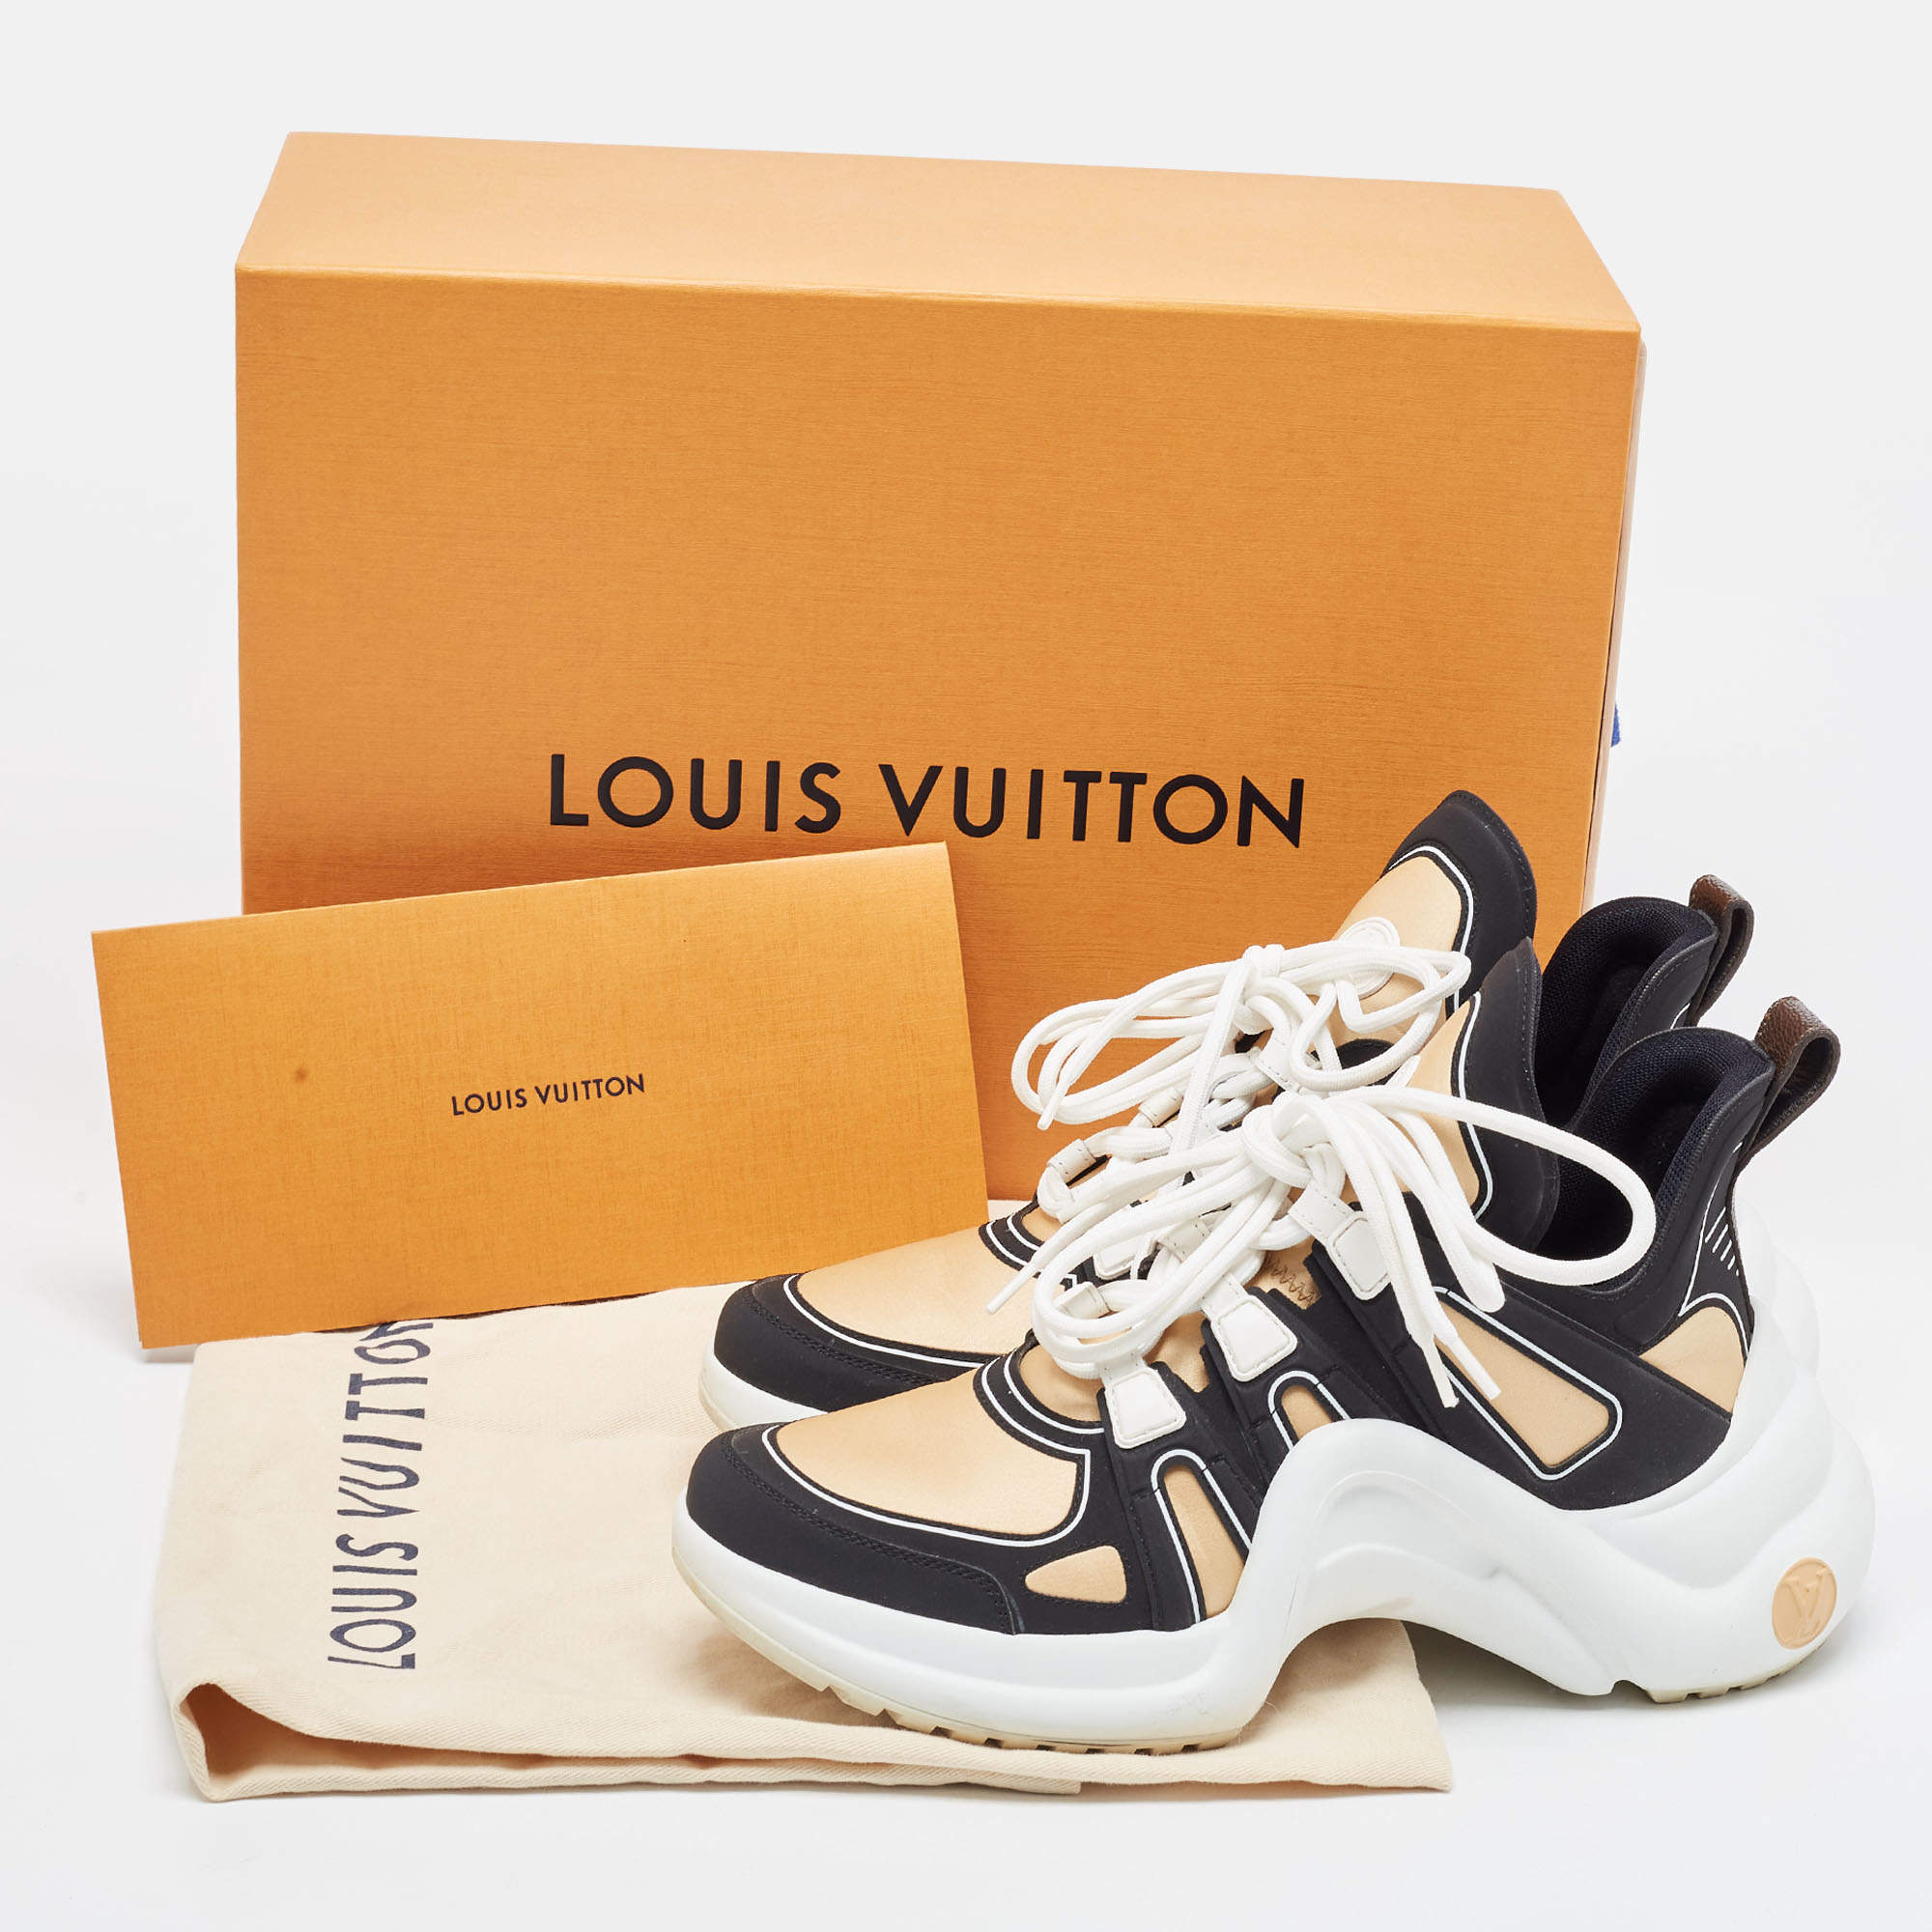 Louis Vuitton LV Archlight Sneaker Nude. Size 39.0